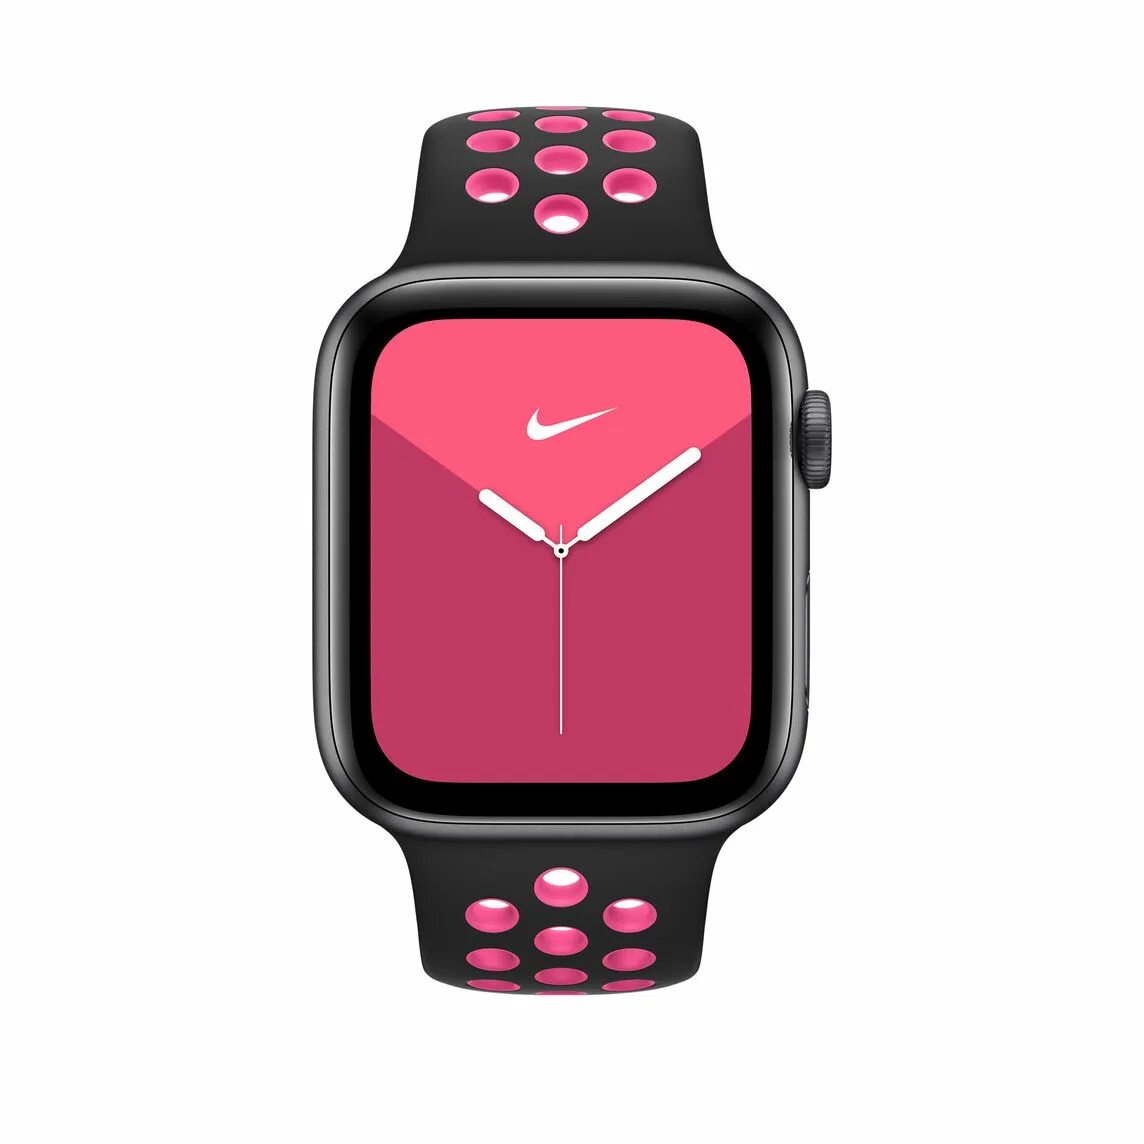 Apple nike sport band. Apple спортивный ремешок Nike для корпуса 44 мм. Часы найк айфон. Nike Sport Band Pink. Black Unity Sport Band 44mm.